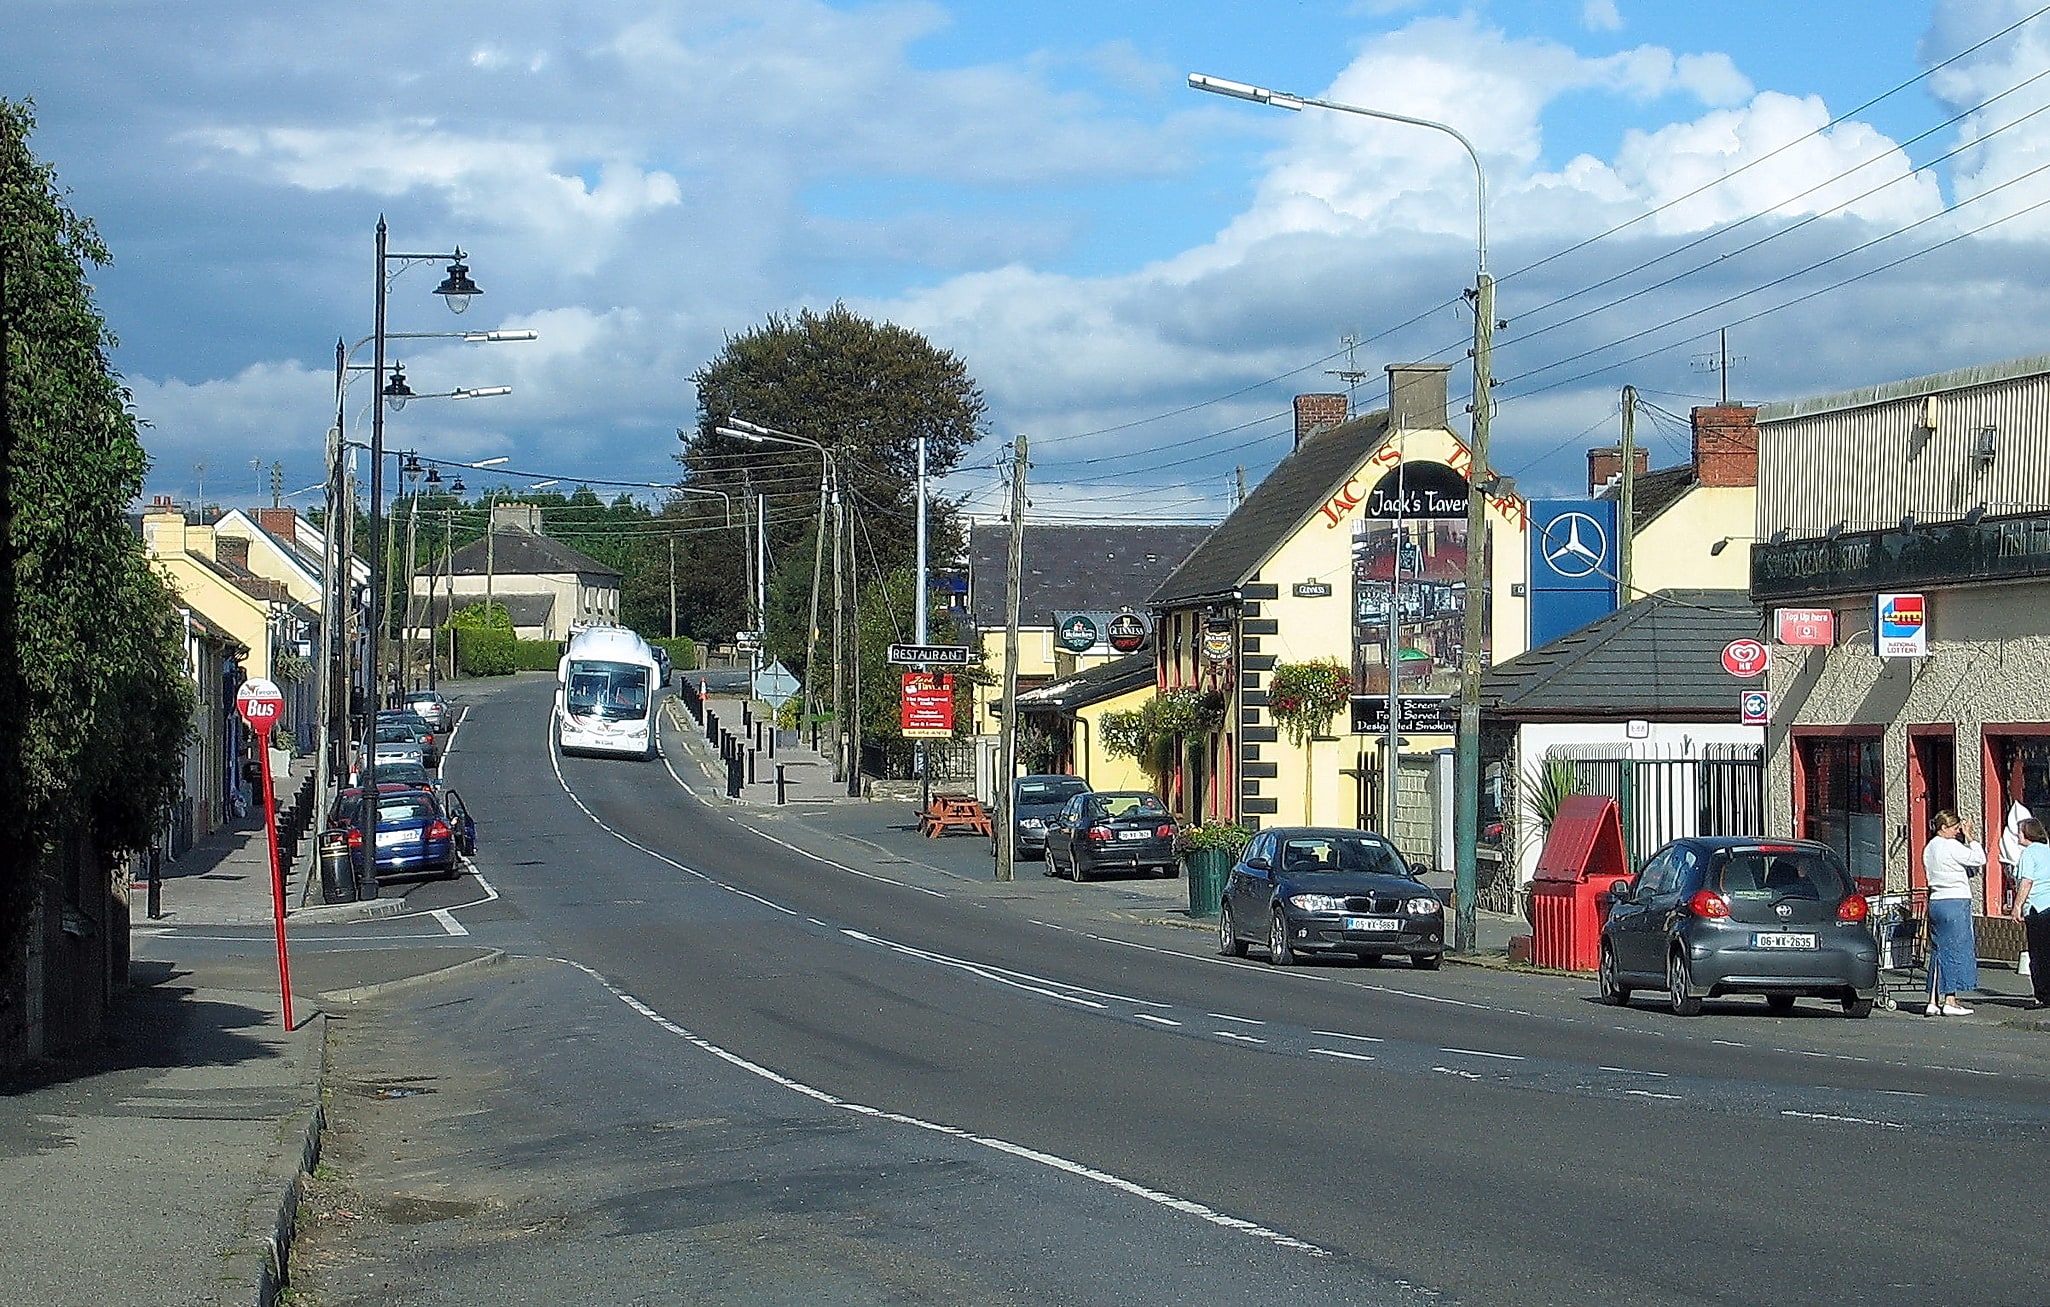 Camolin, Ireland